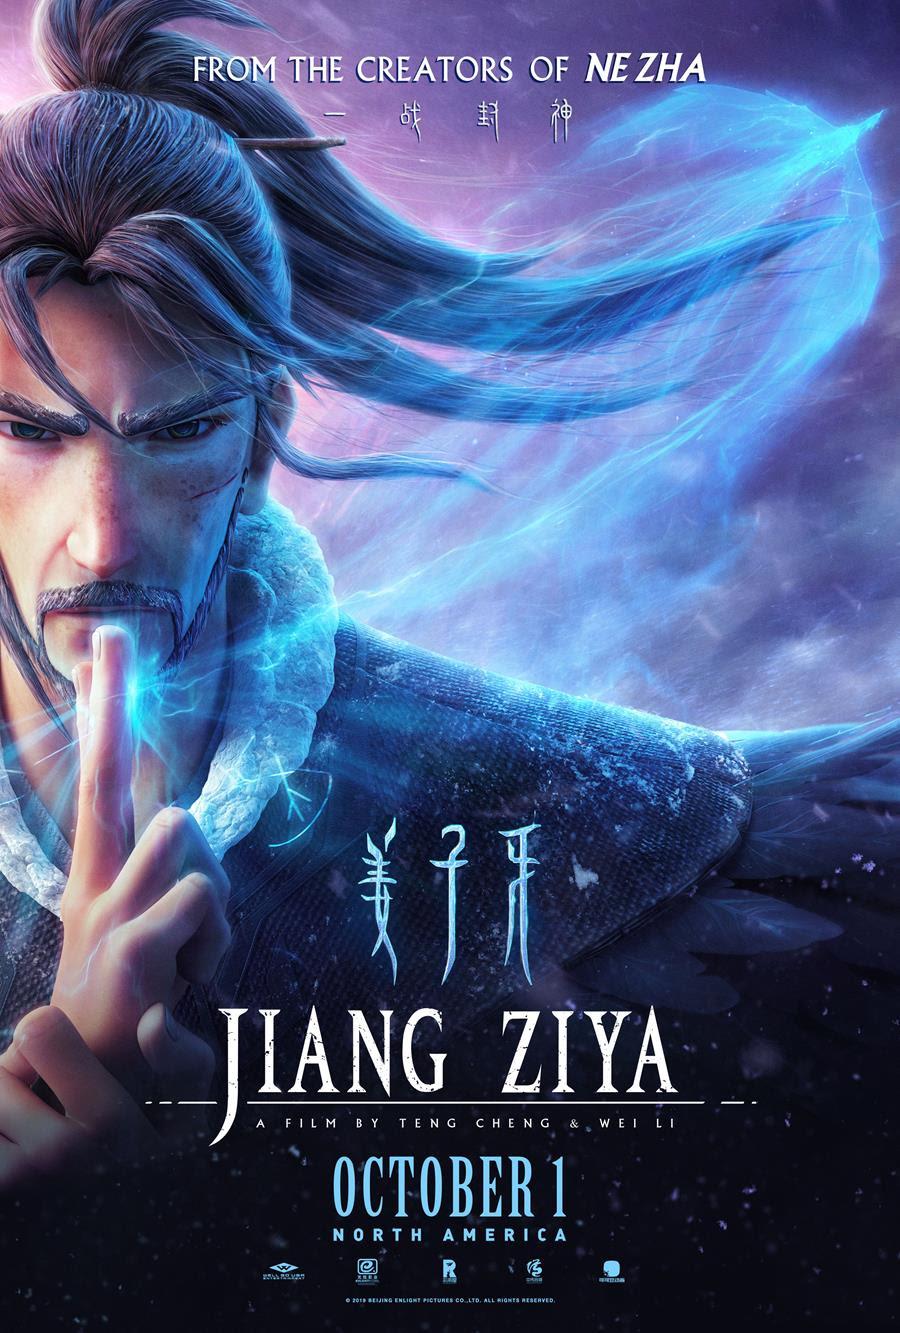 "Jiang Ziya" poster